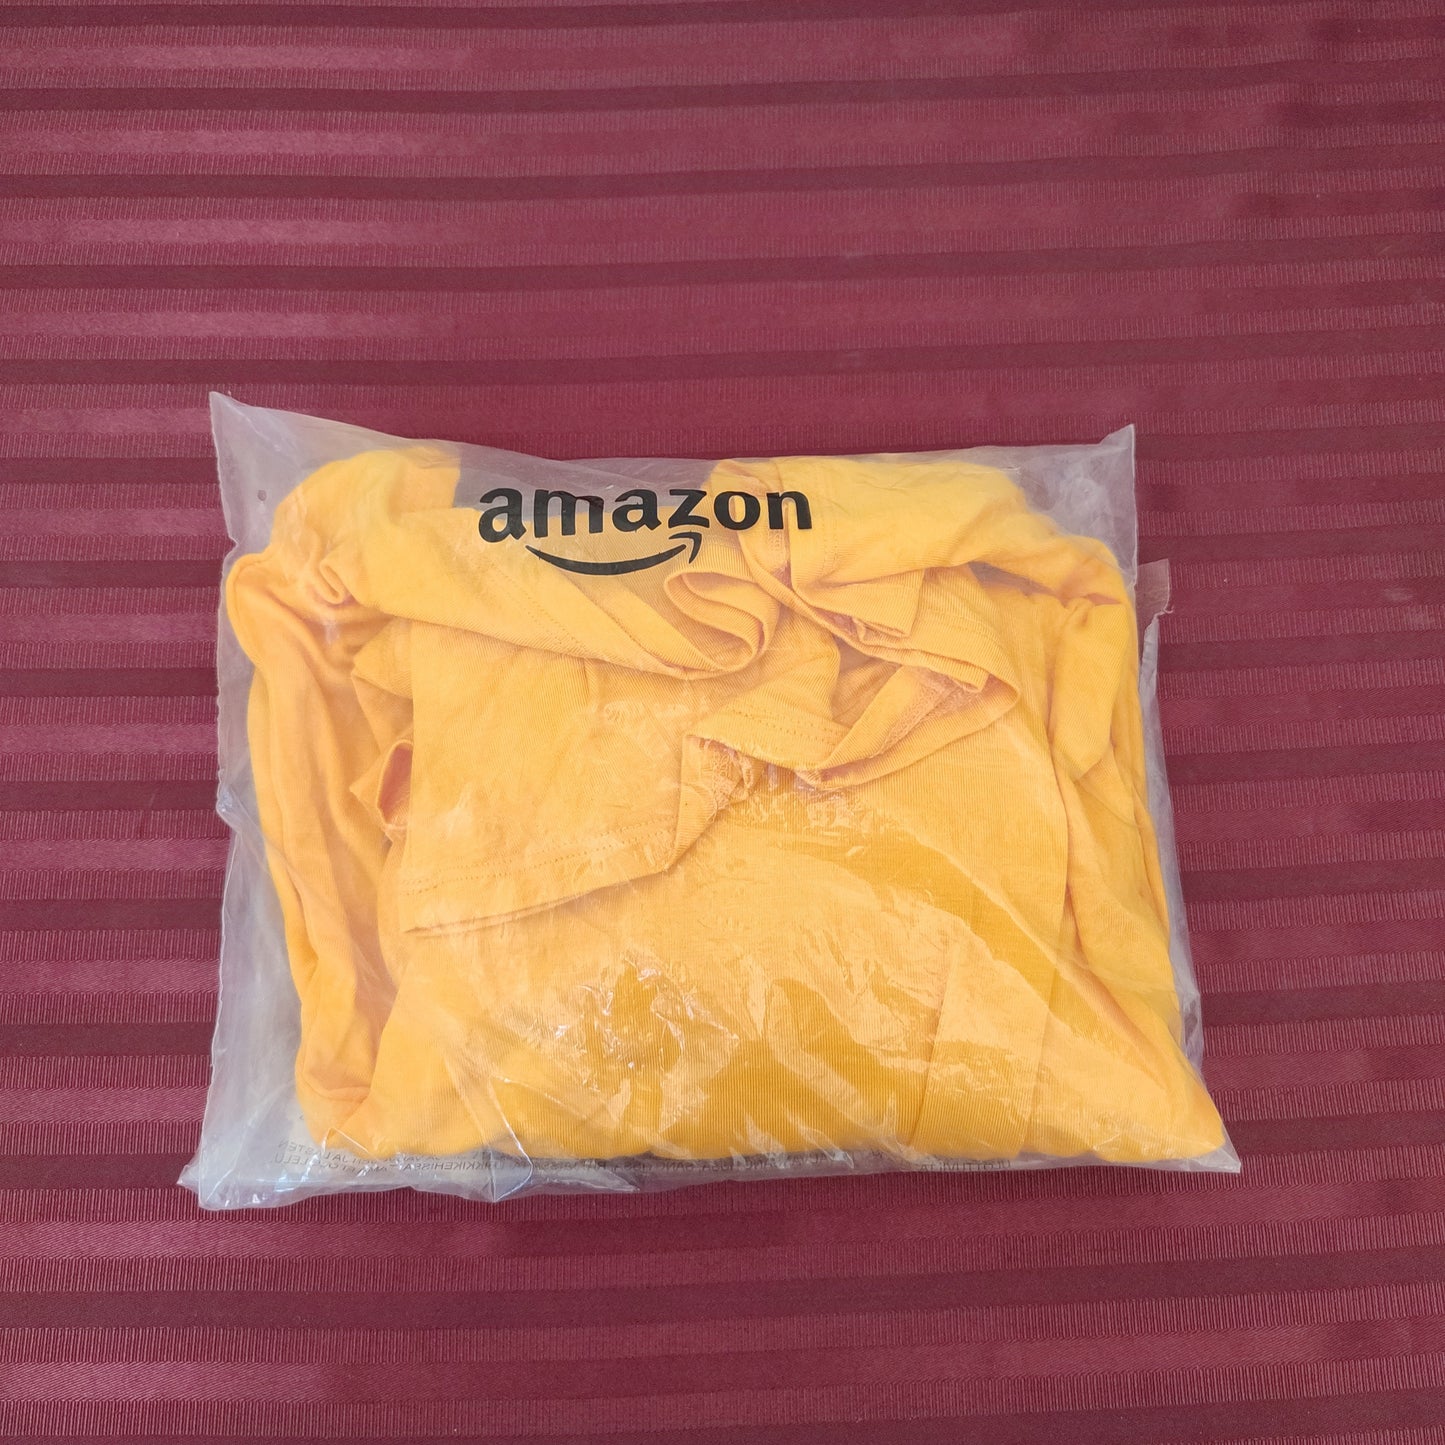 Vestido para mujer color amarillo talla XS - Amazon Essentials (Nuevo)